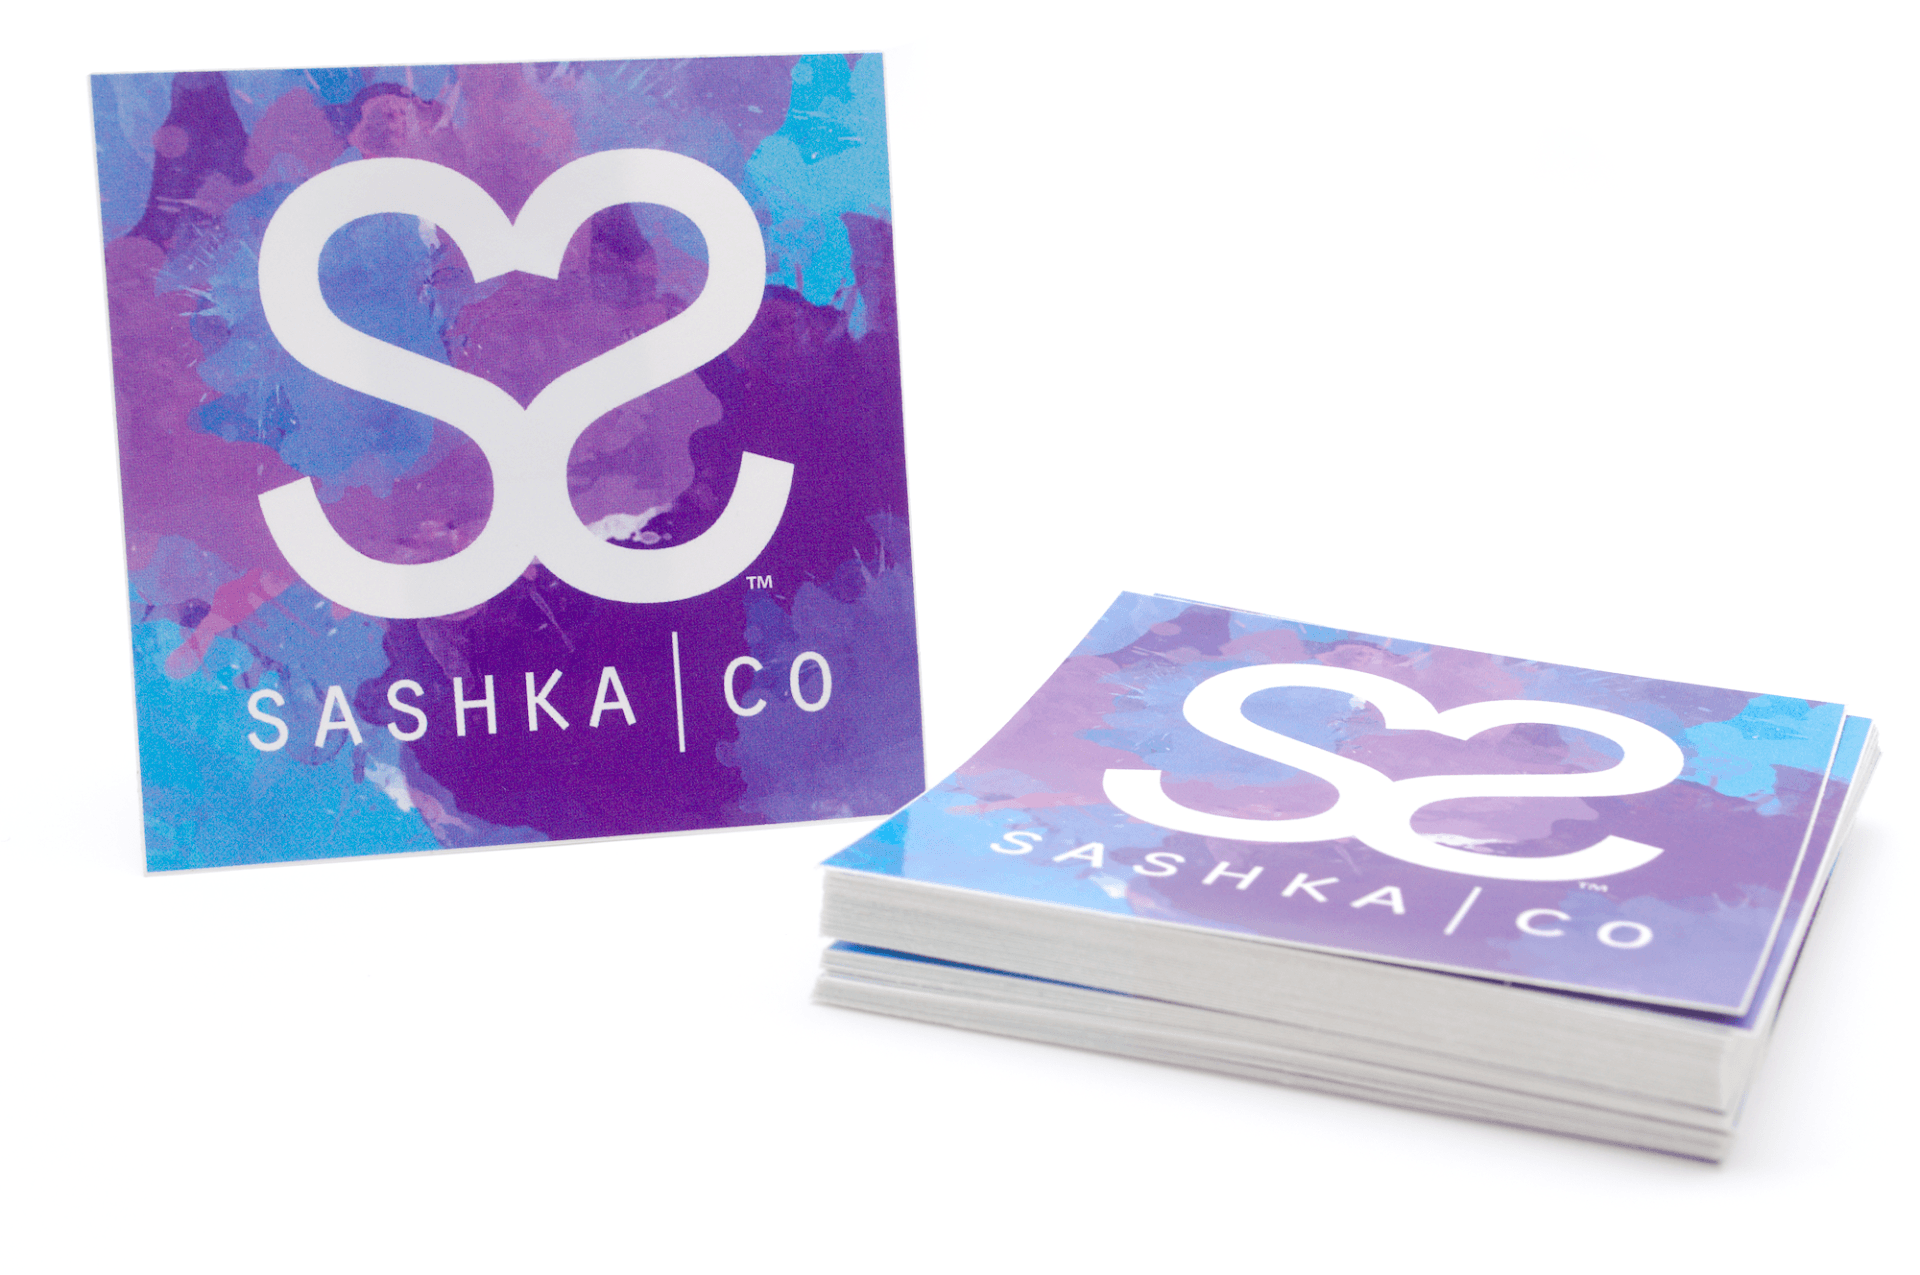 Sashka Co. Extended 8" Bracelet Black / Gray / Silver Limited Edition Bracelet - Extended 8"